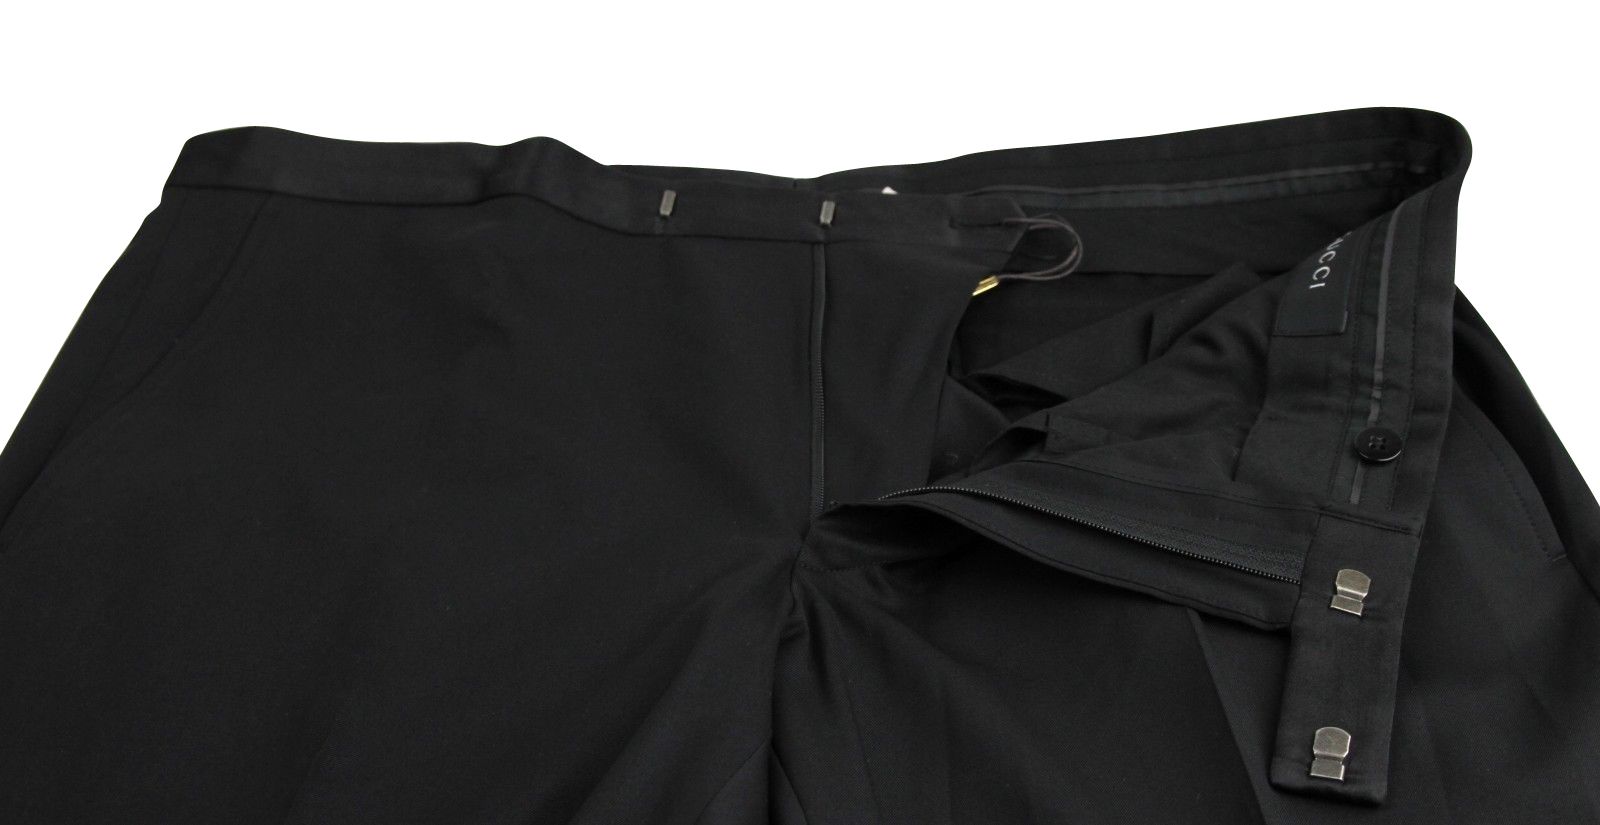 Gucci Men's Skinny Black Wool Evening Dress Pant